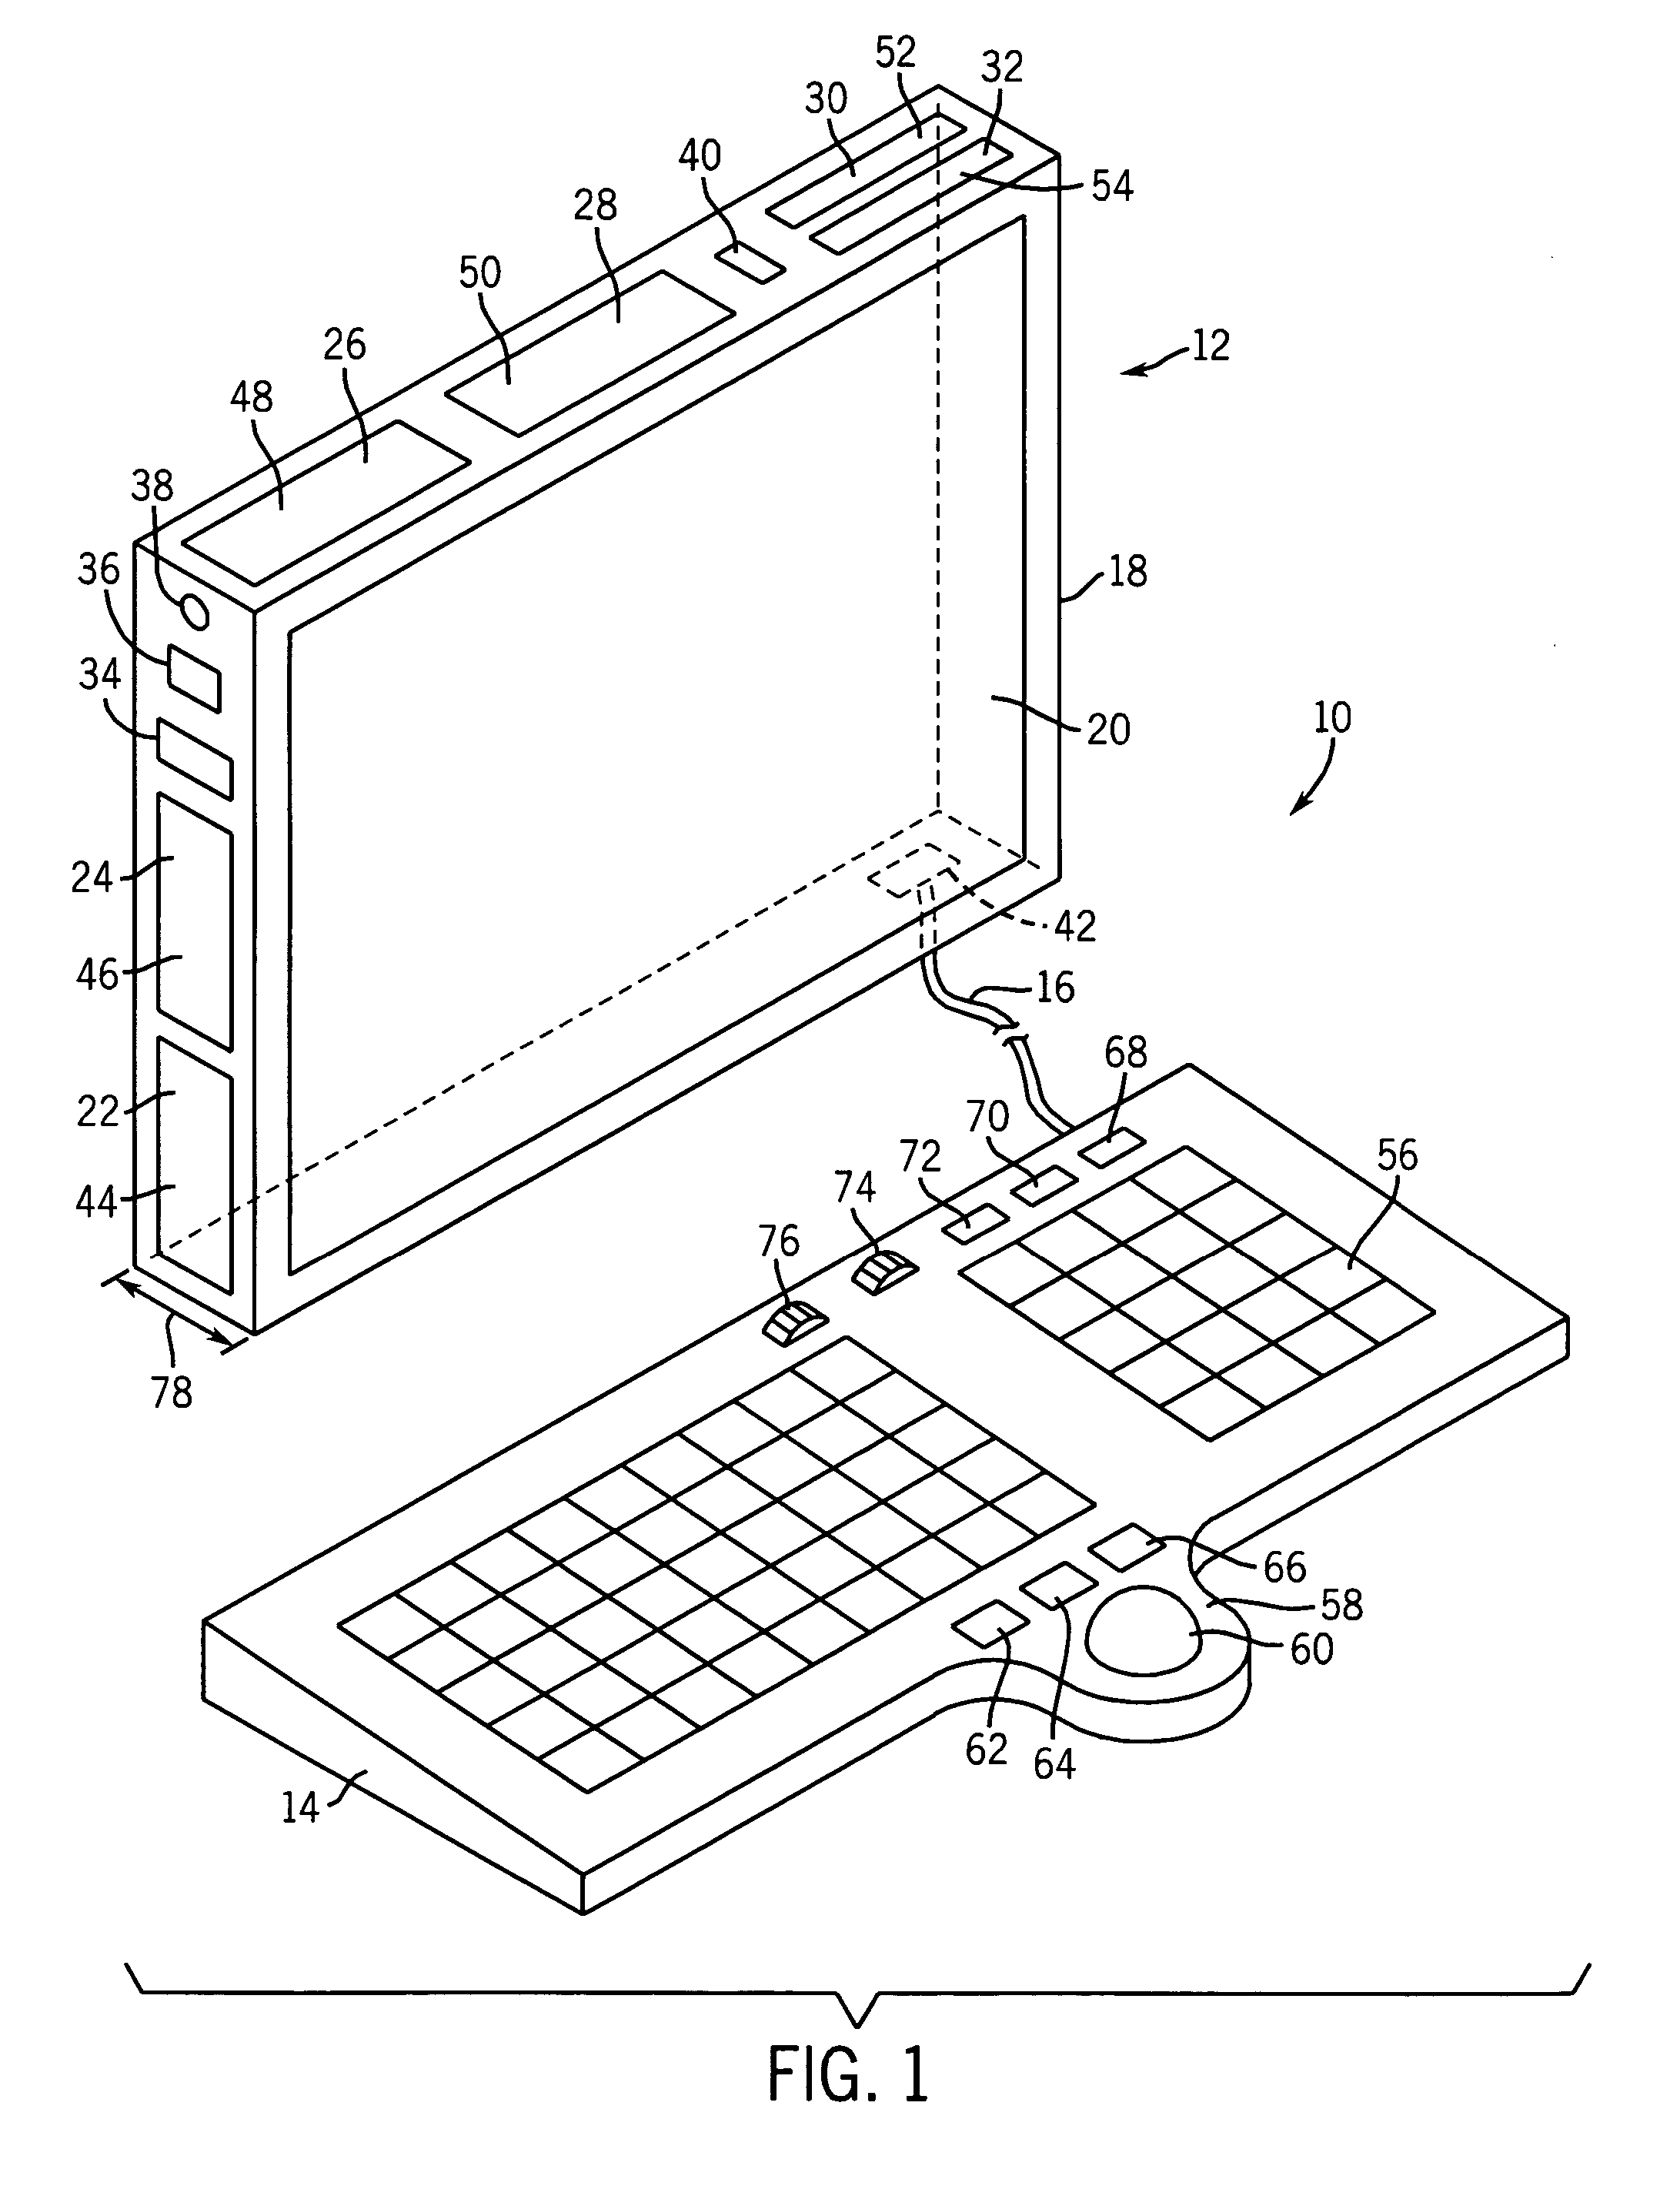 Flat panel computer having an integrally housed flat panel display